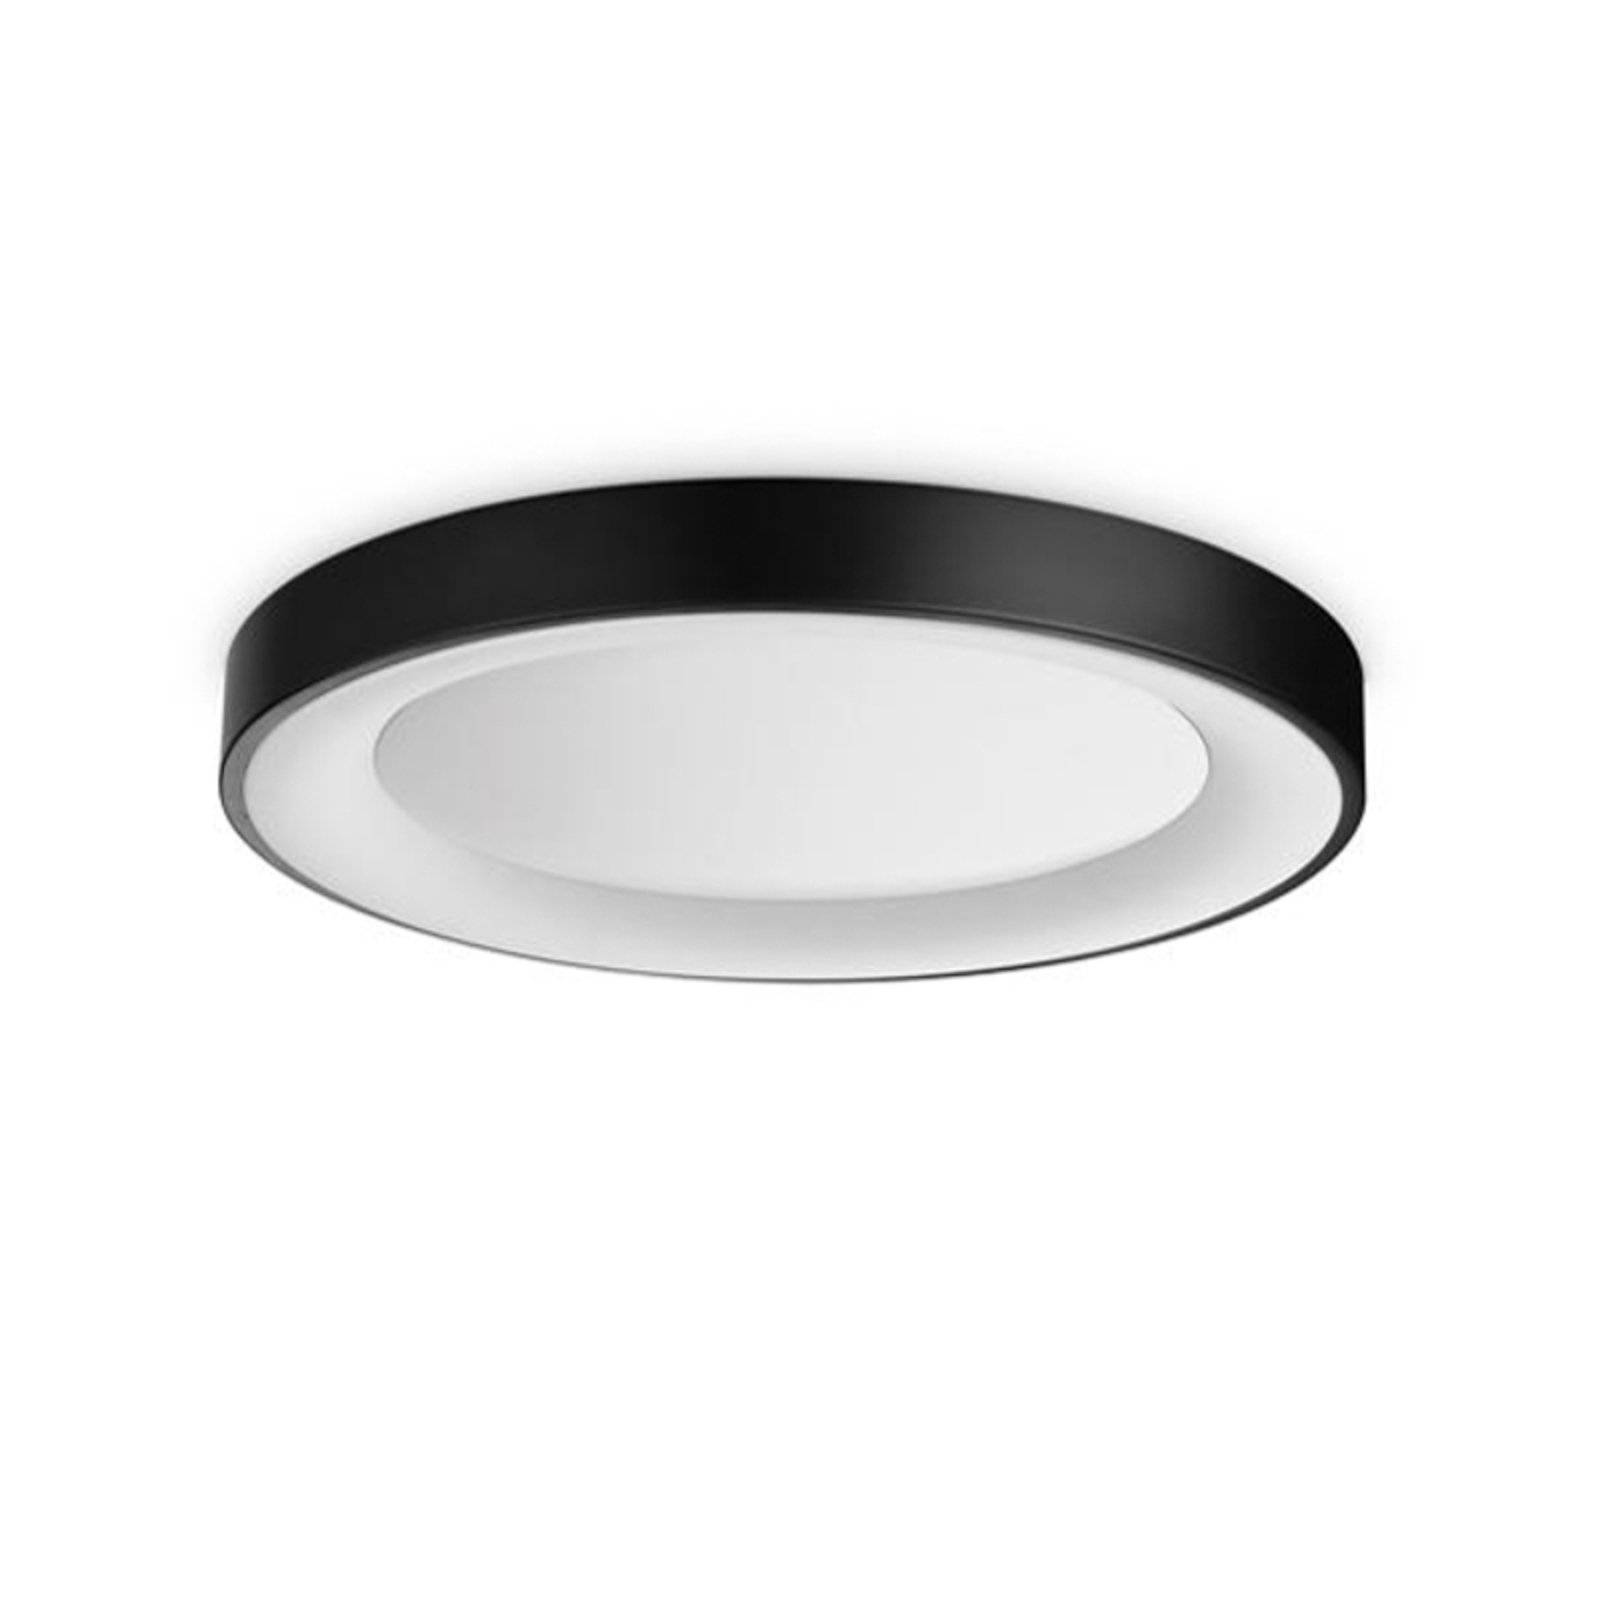 Ideal Lux LED ceiling light Planet, black, Ø 50 cm, metal